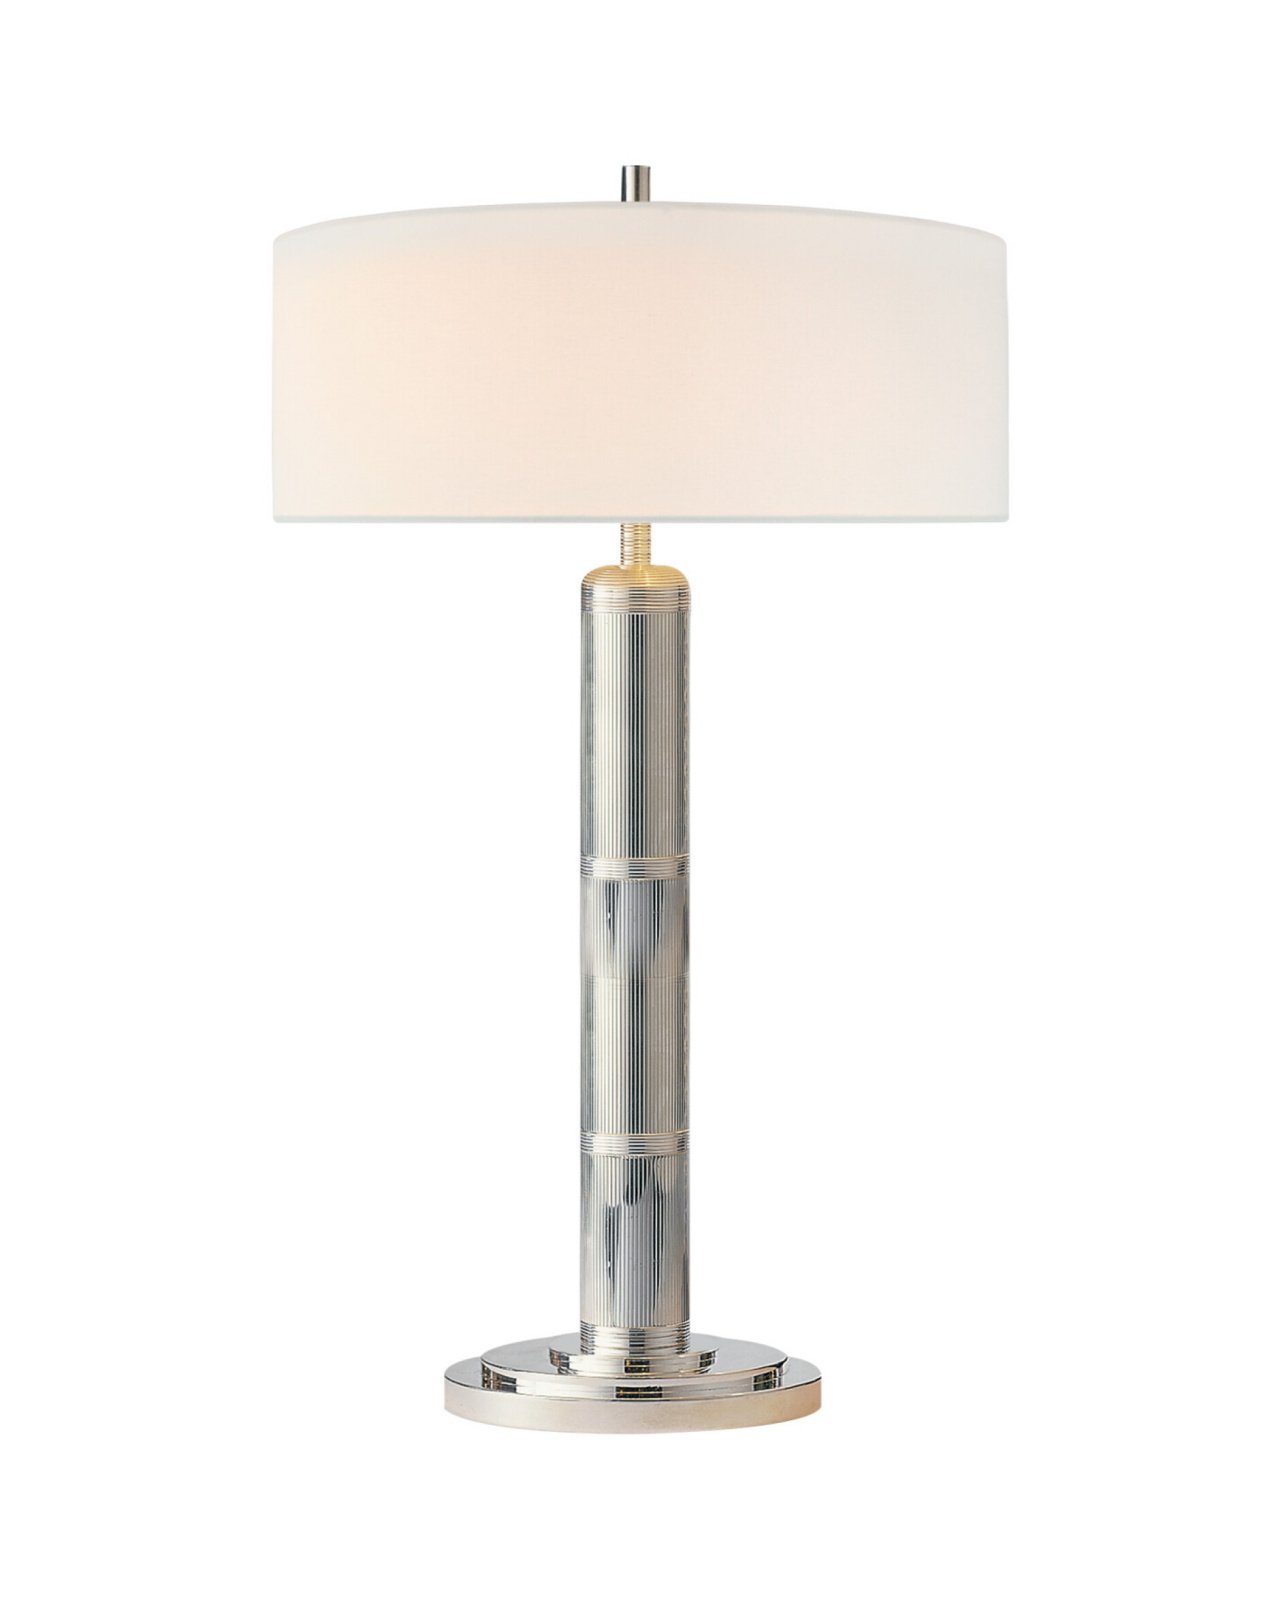 Longacre Tall Table Lamp Polished Nickel